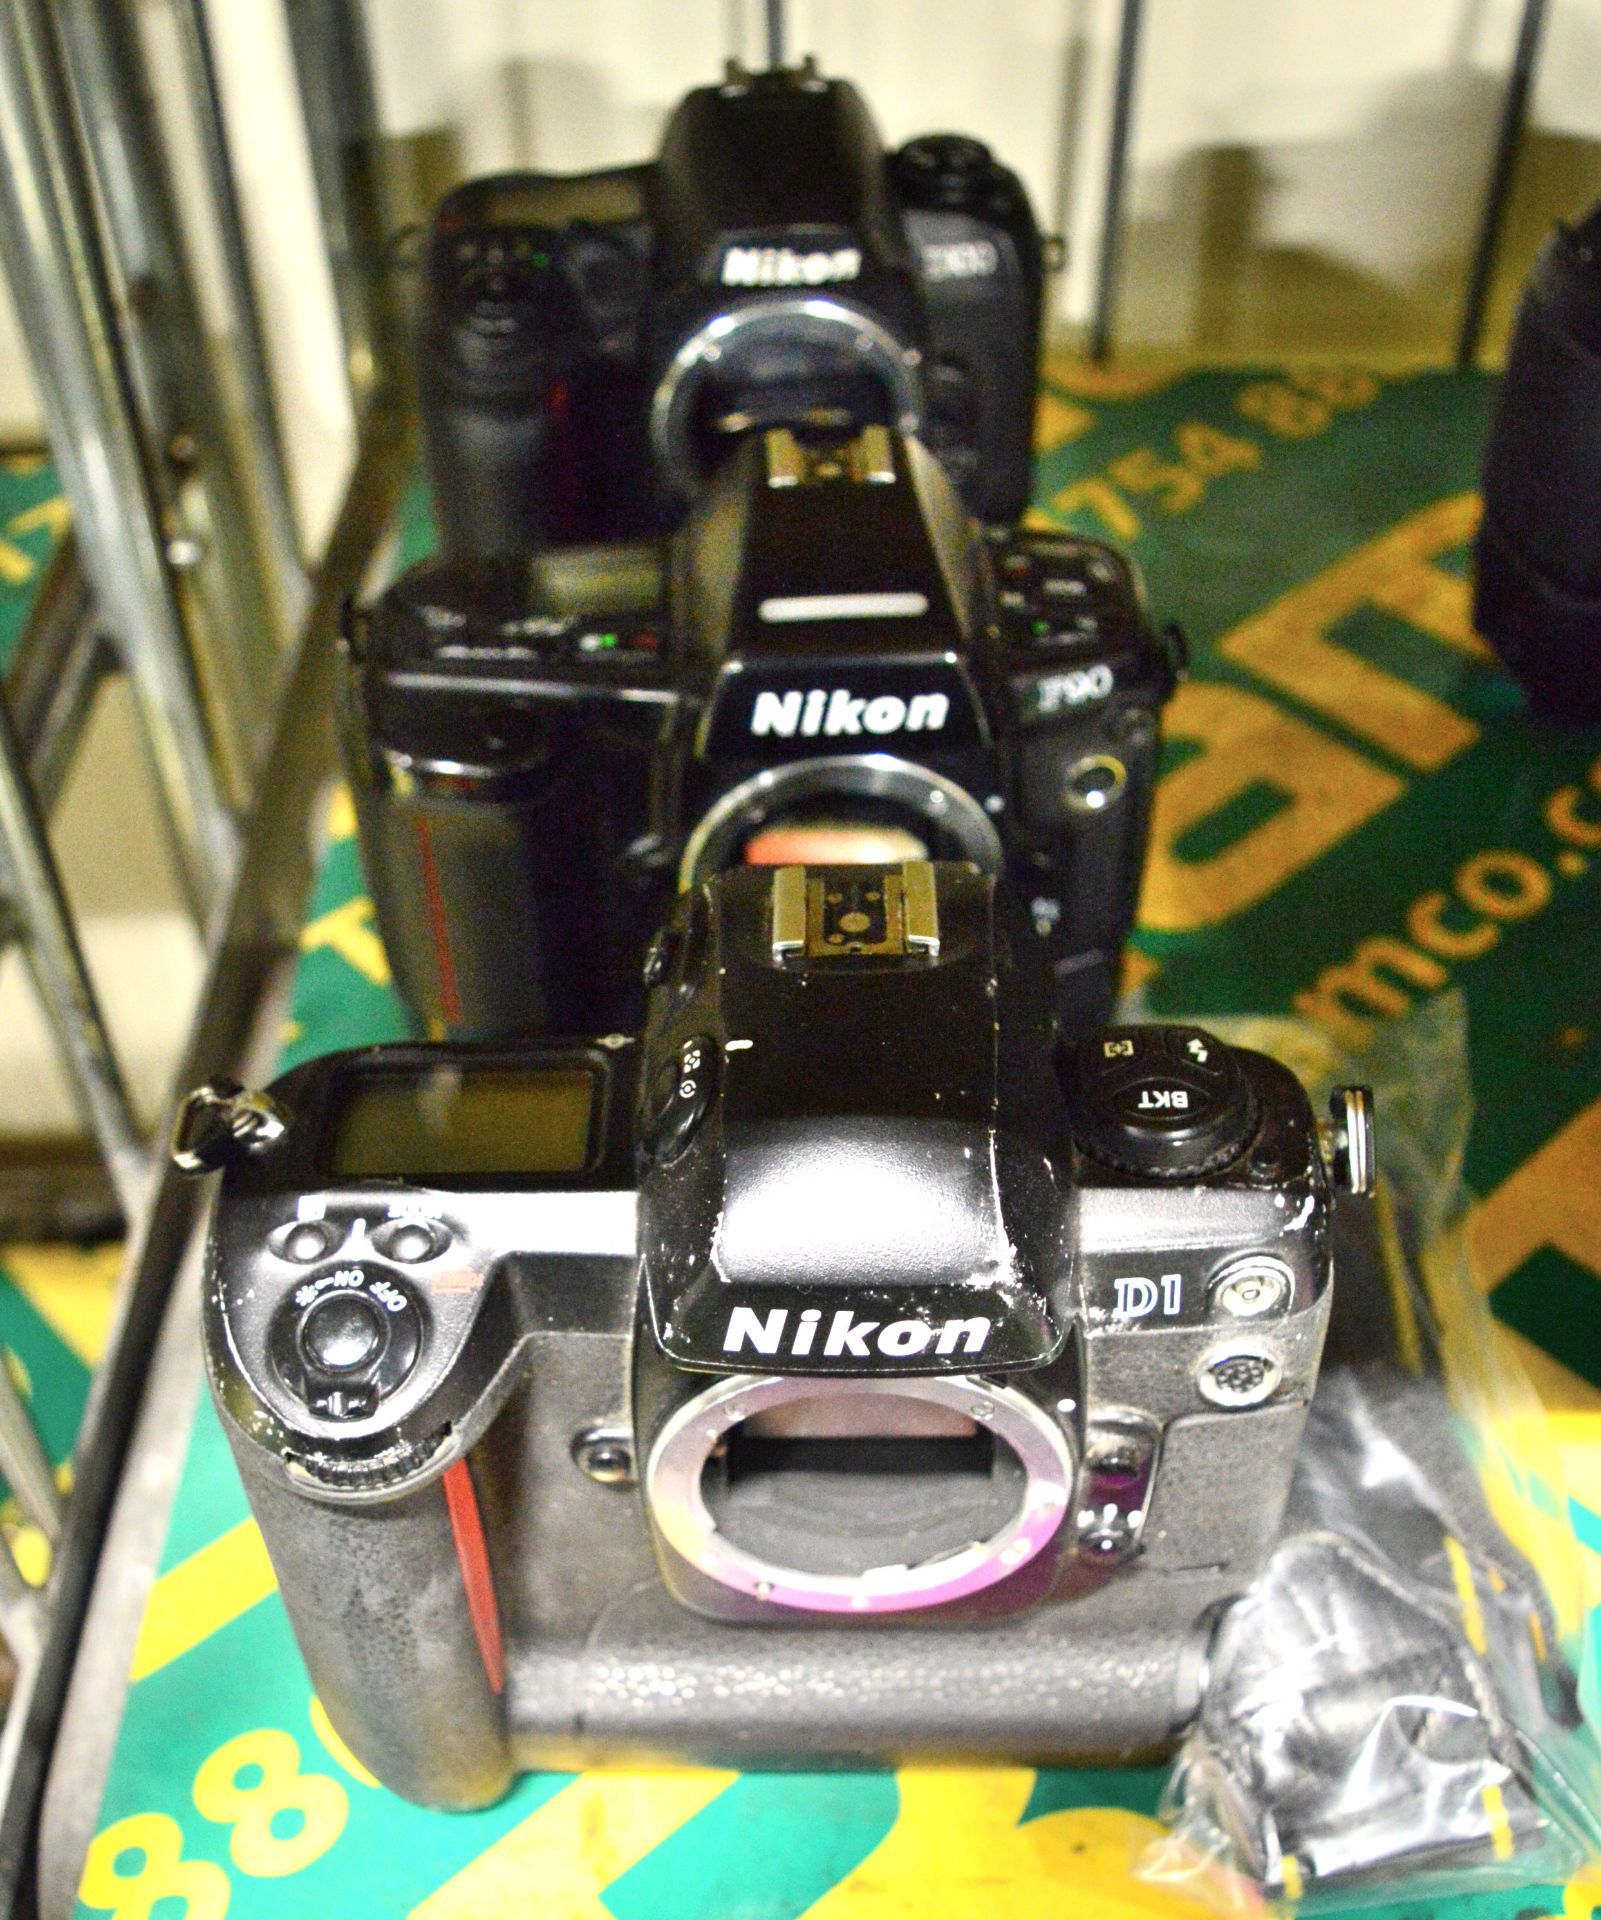 Nikon D1, D100, Digital Camera Bodies with Battery Boxes. Strap. Nikon F90 Camera body